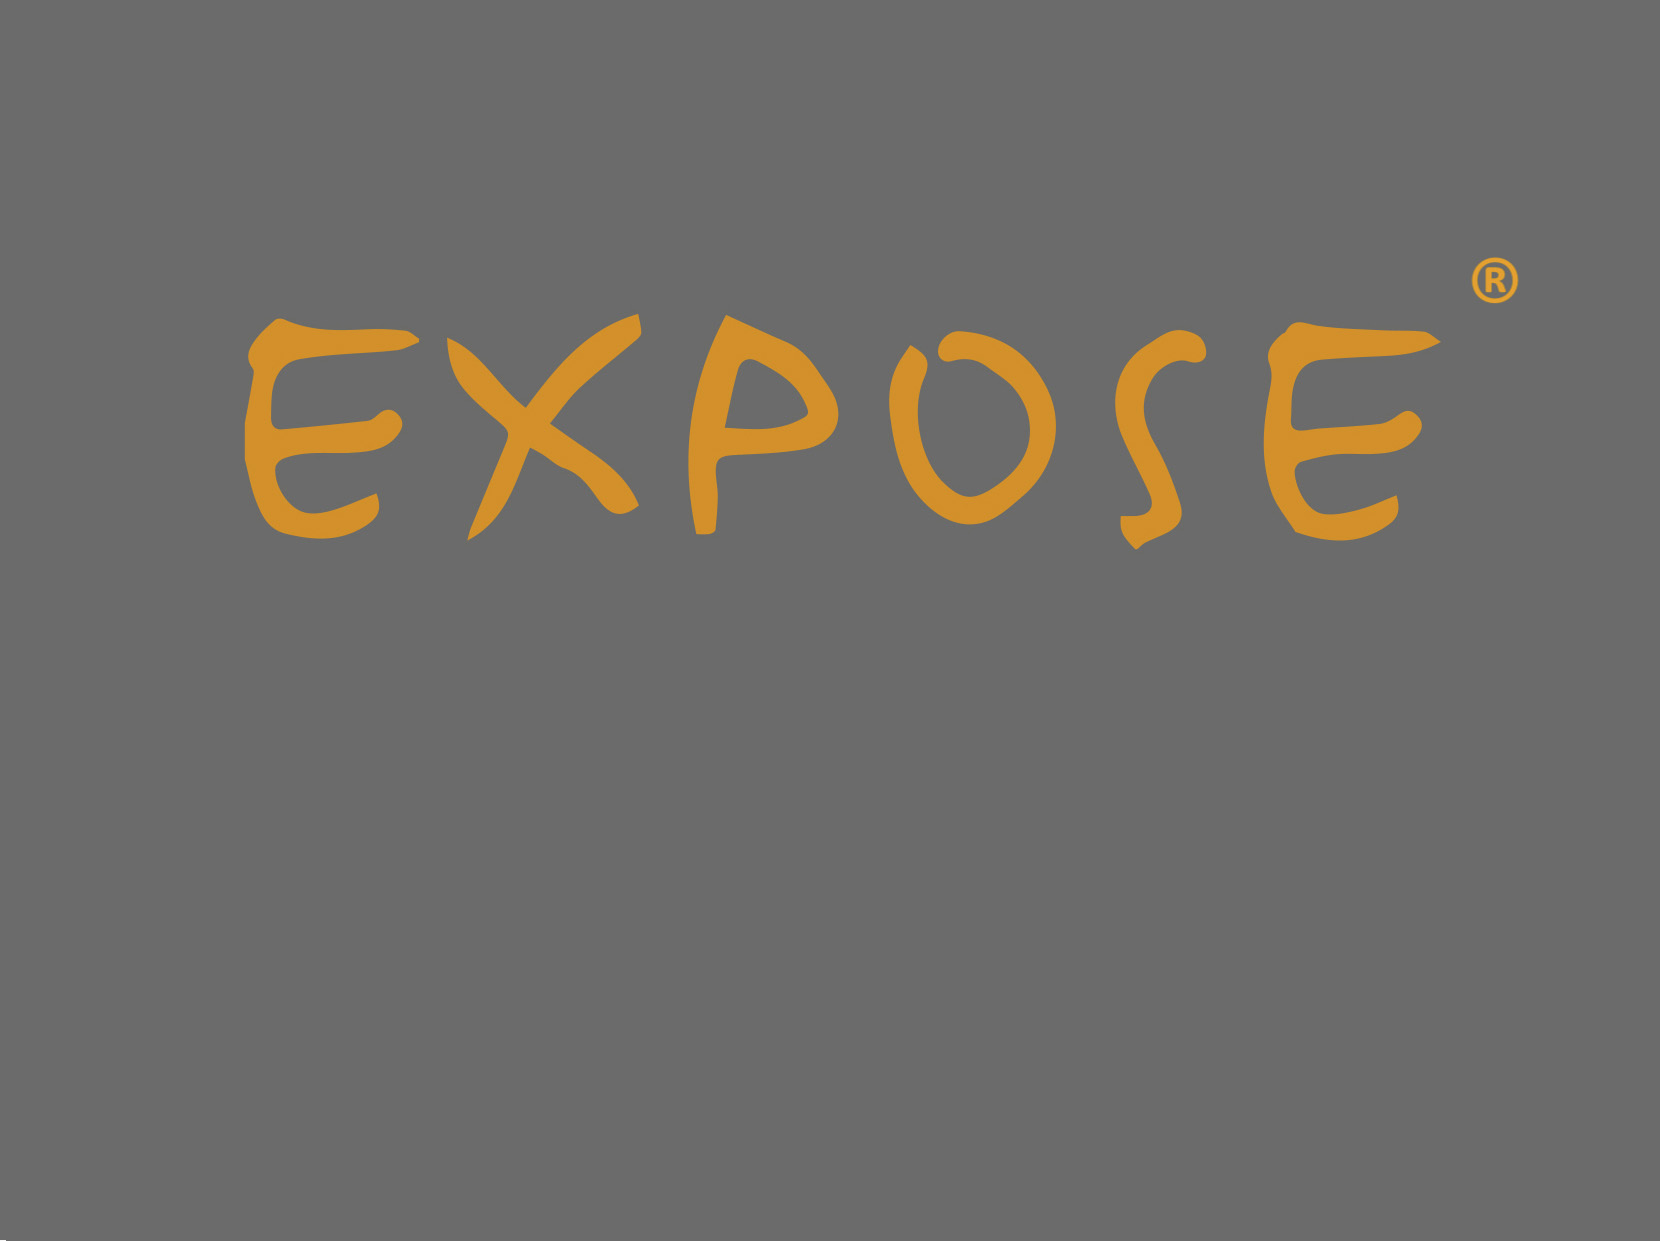 Expose-Visitk 55x85_L 3.indd